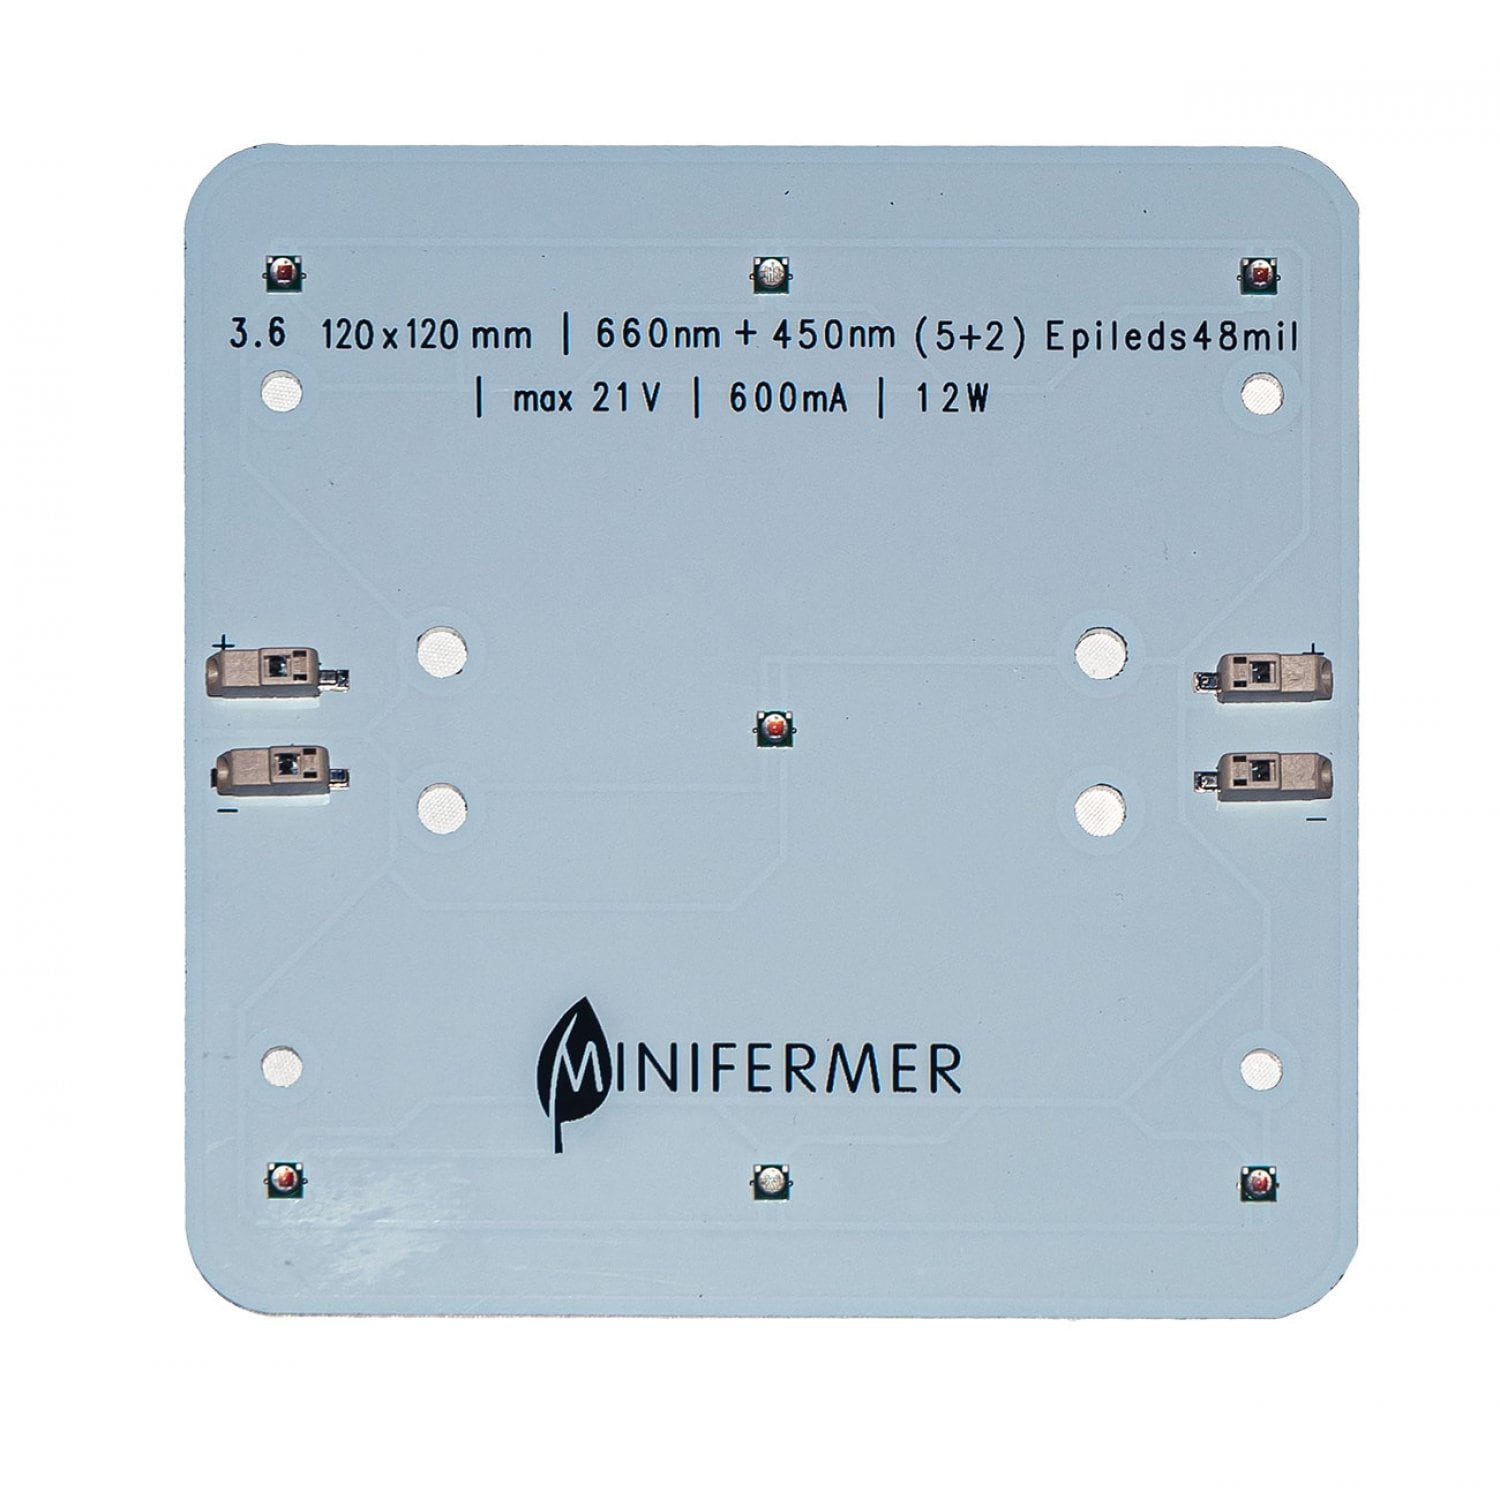 3.6 Quantum board MINI Биколор: 660nm + 450nm Epileds (5+2)